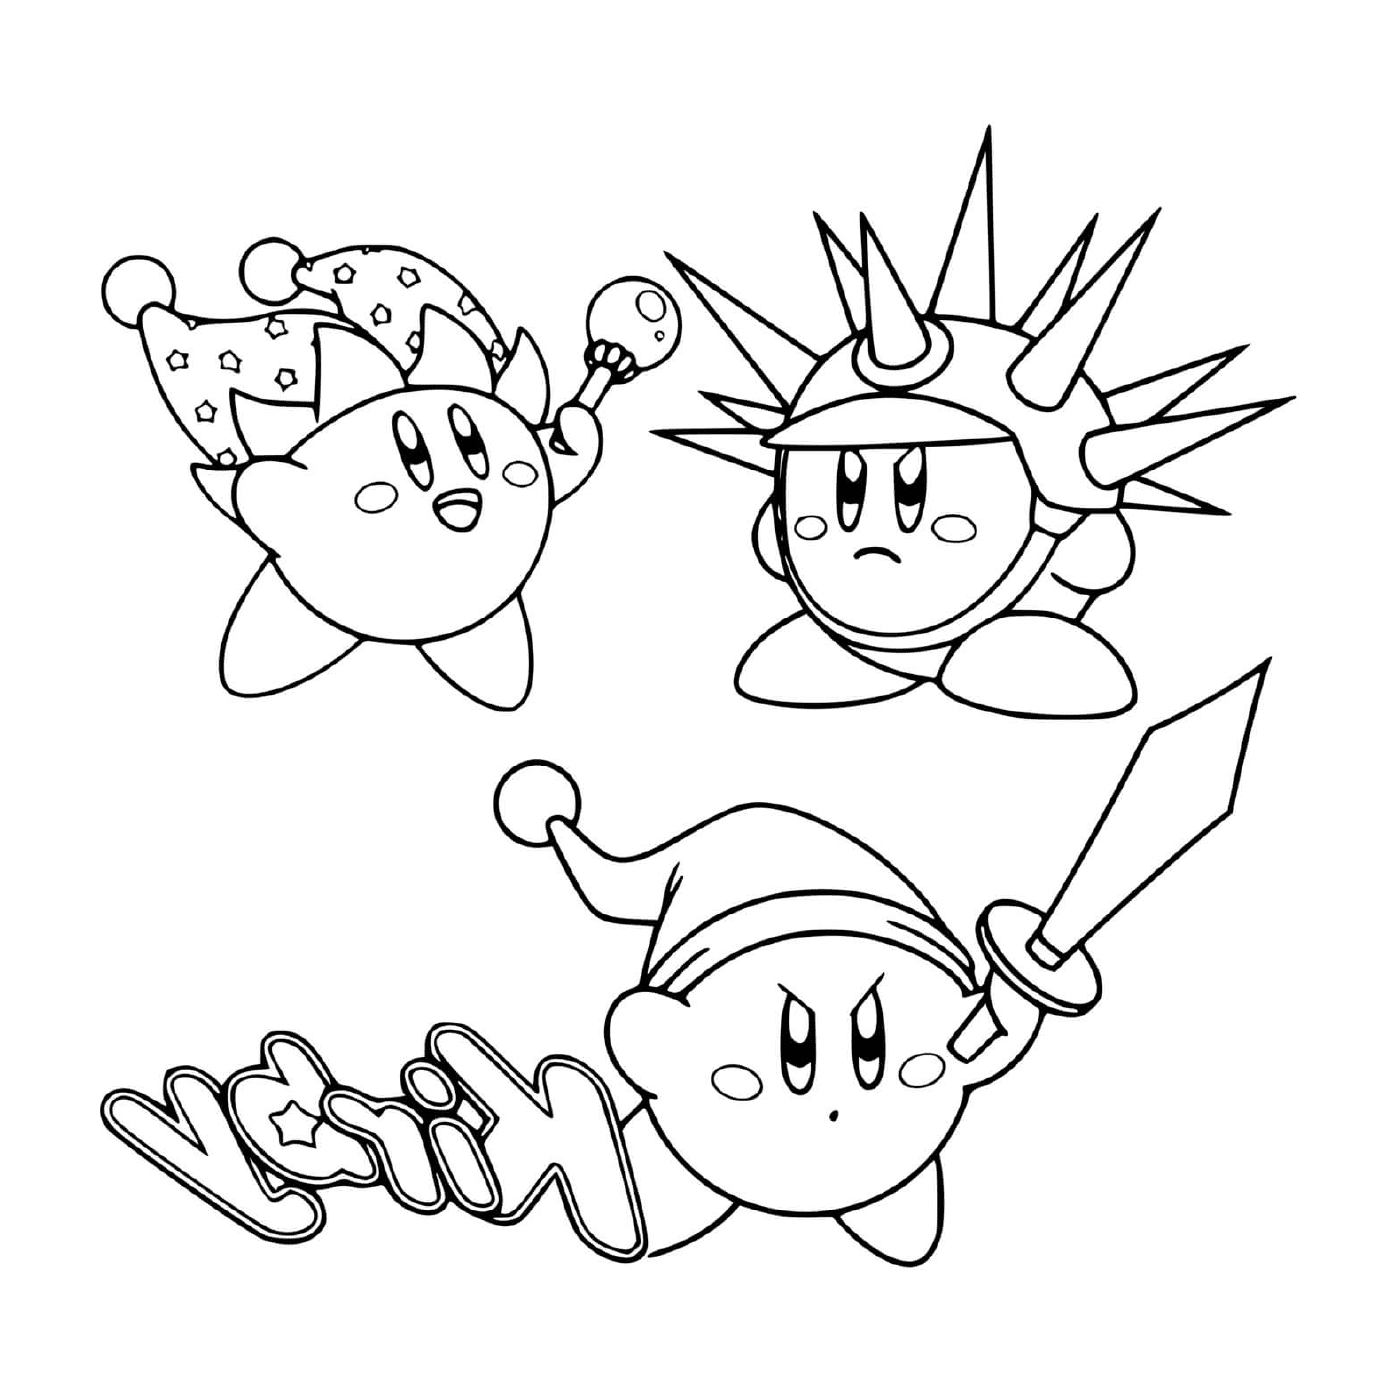  Three Kirby characters 